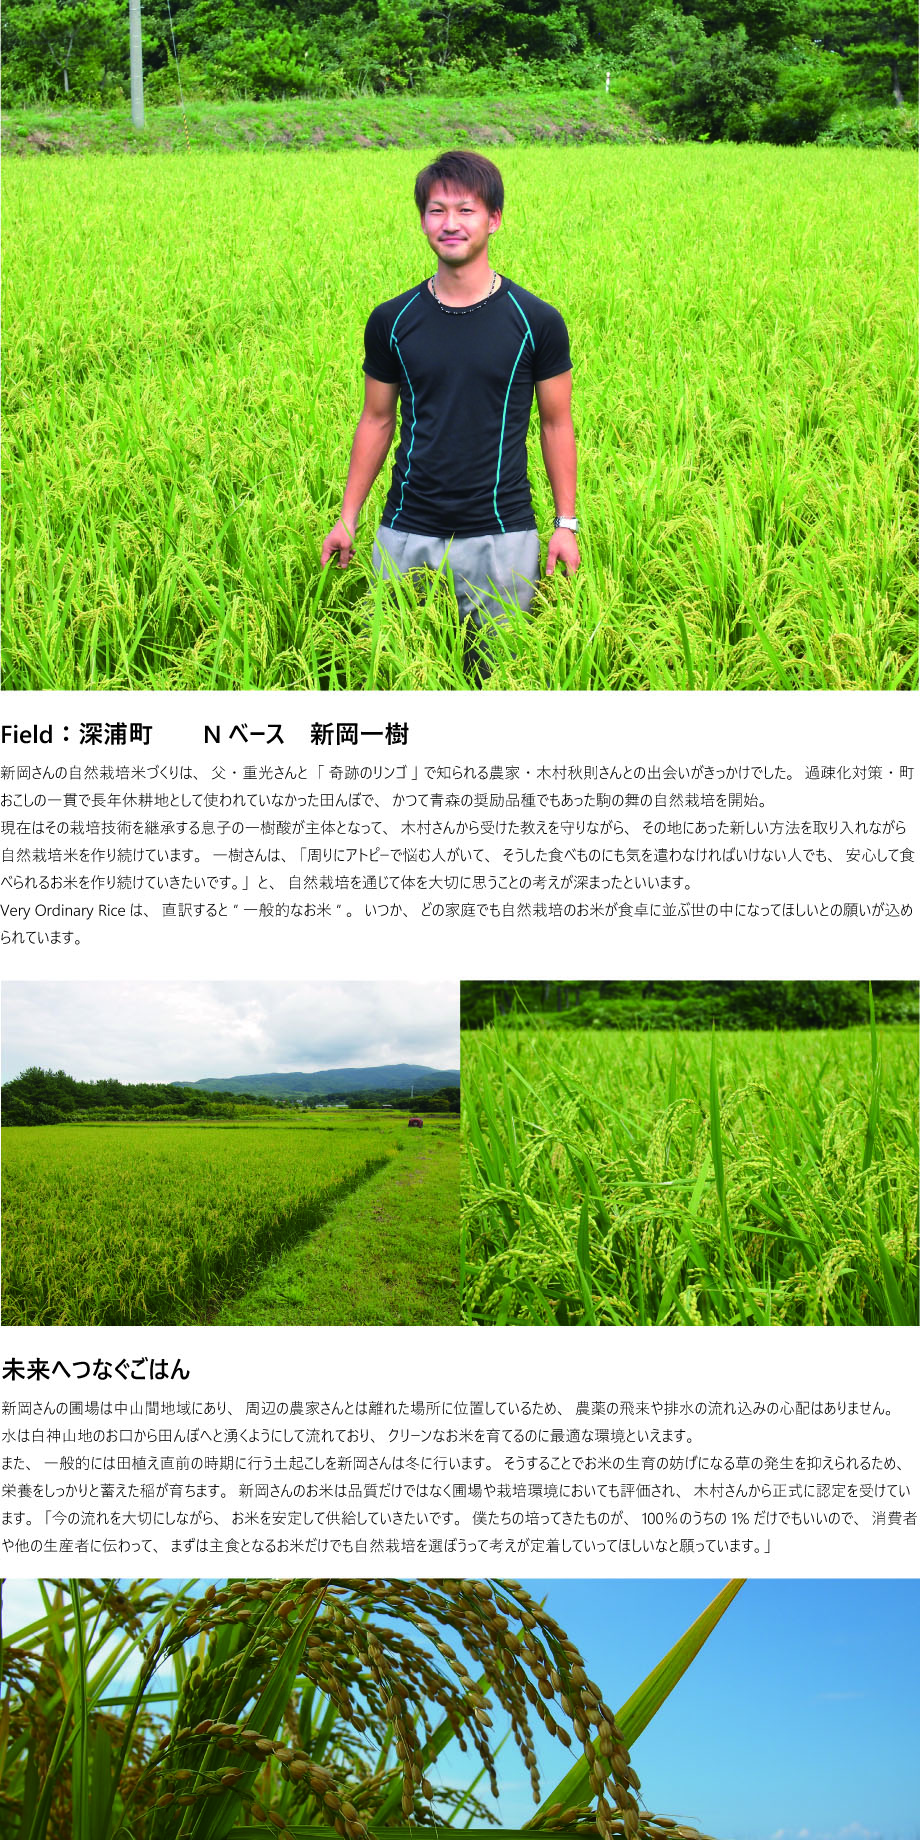 (R03産)Very Ordinary Rice玄米1kg